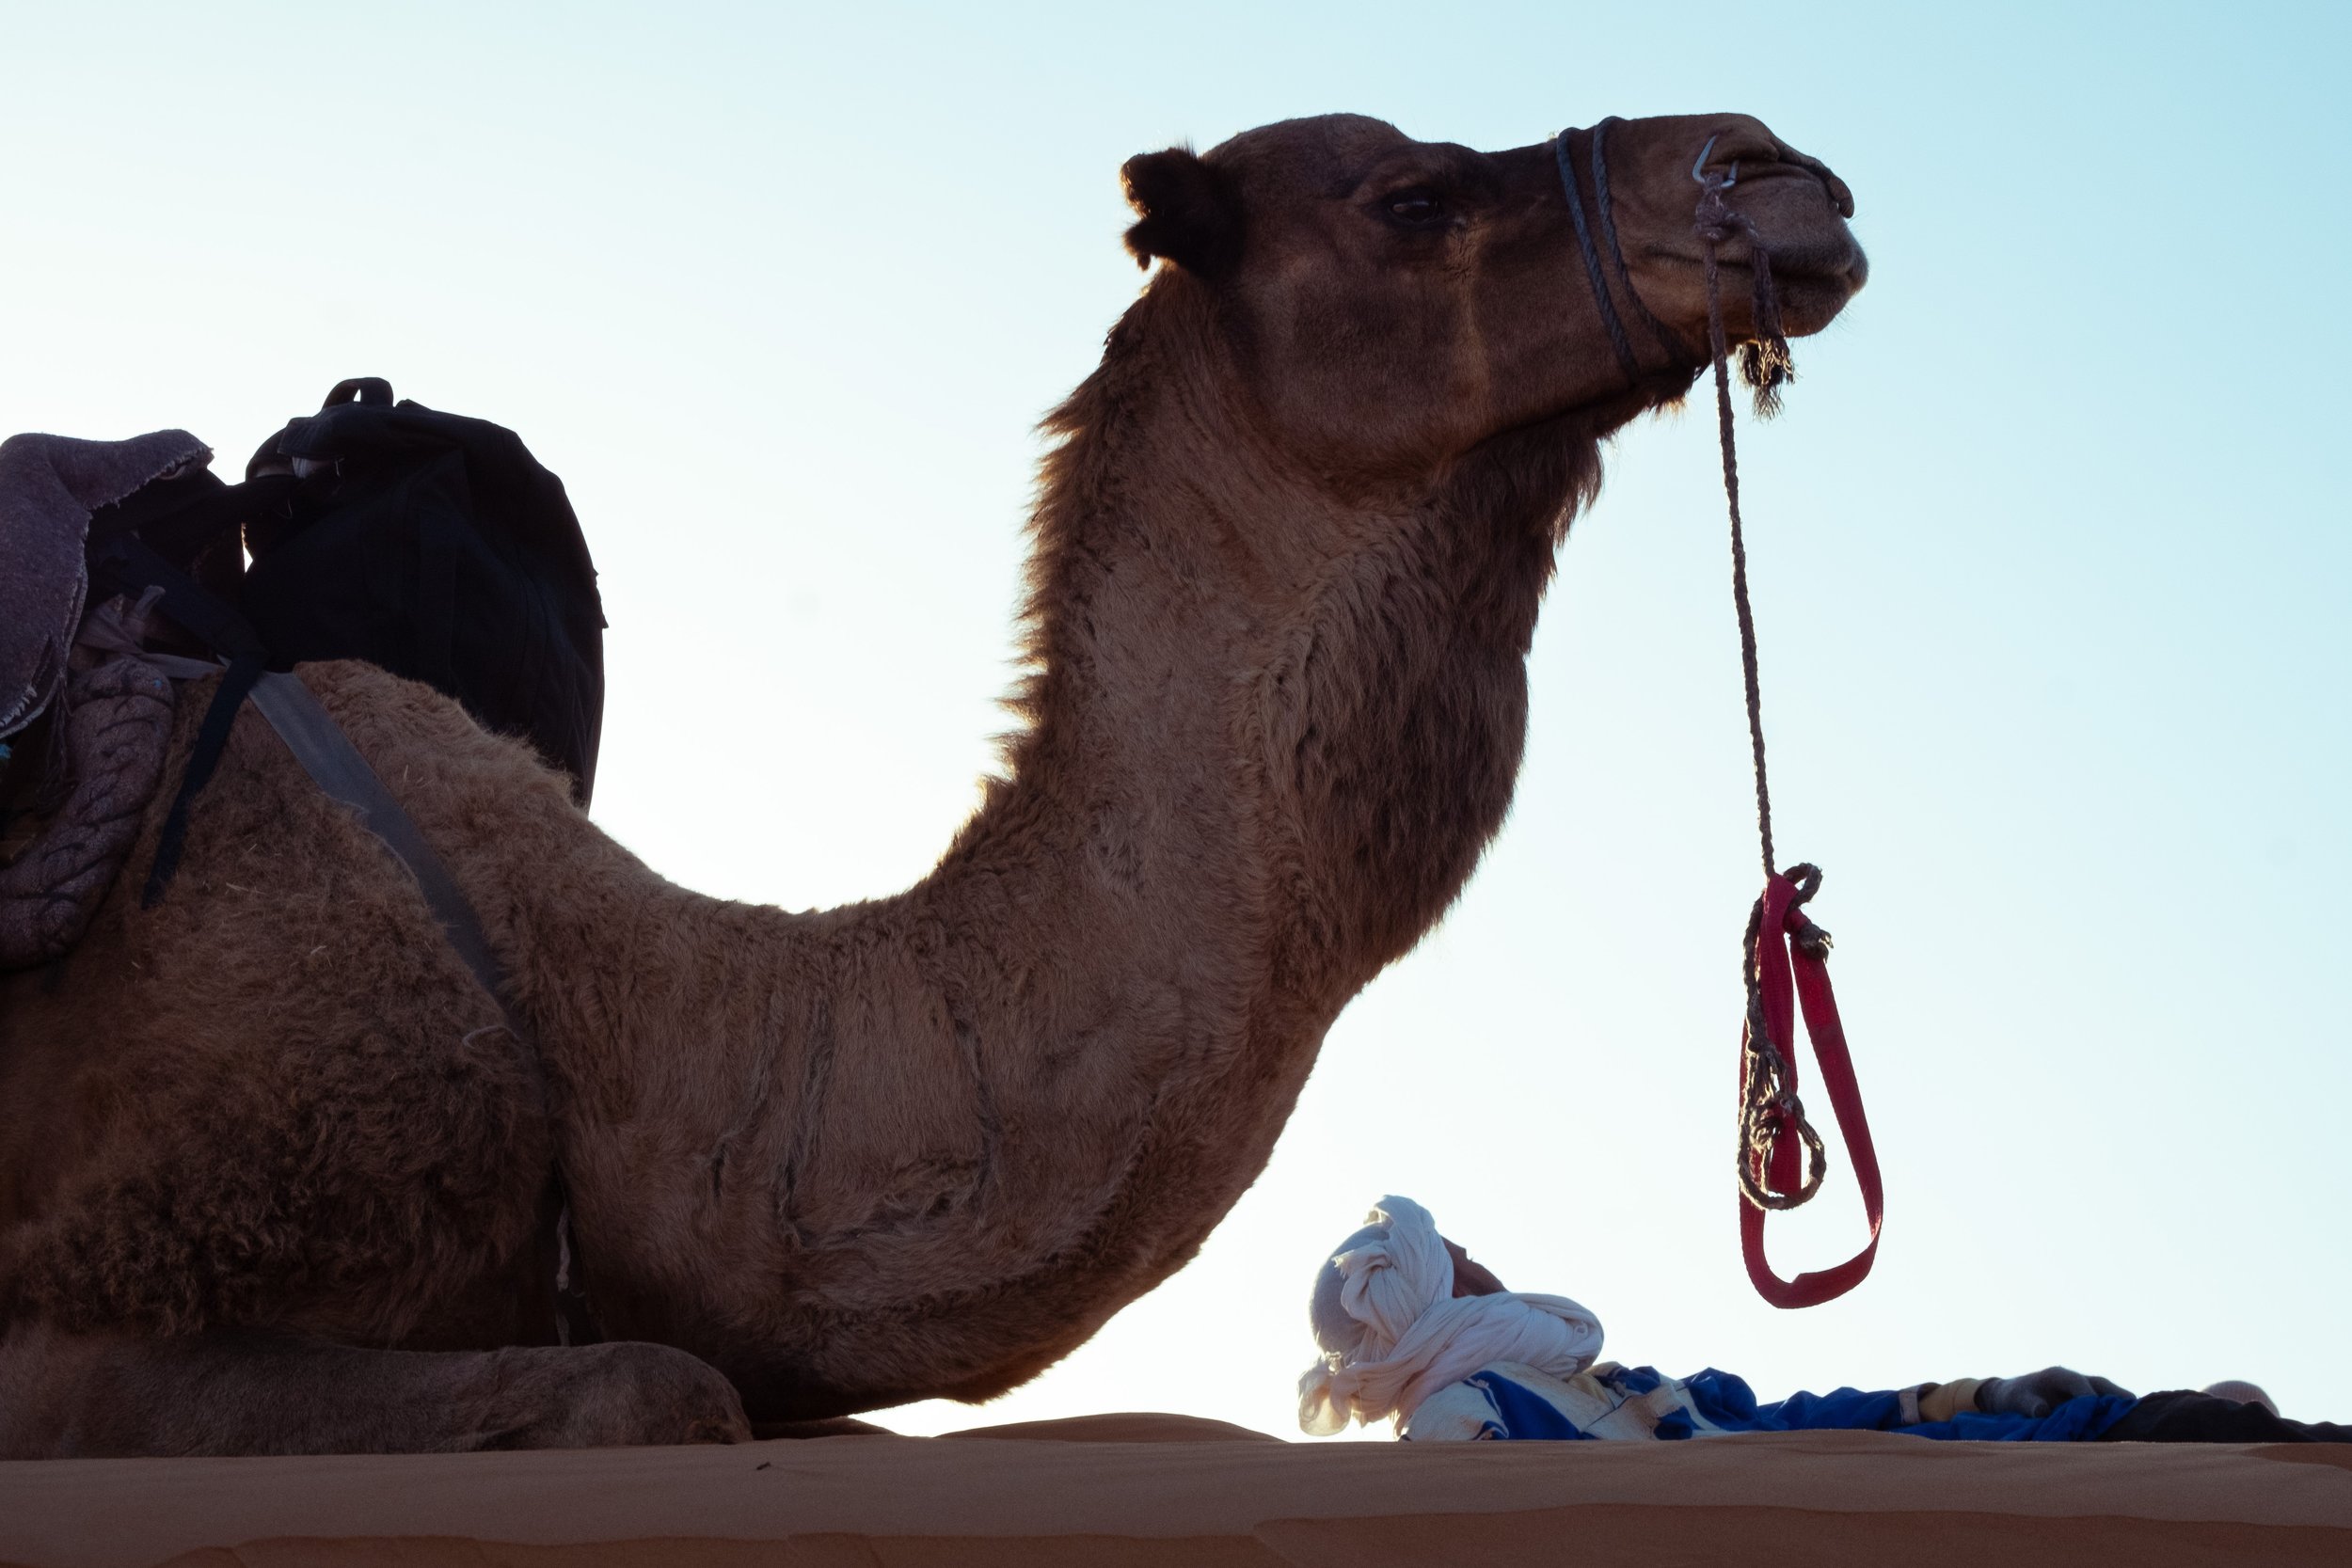 Mohamed y su dromedario. Sahara desert, Marruecos